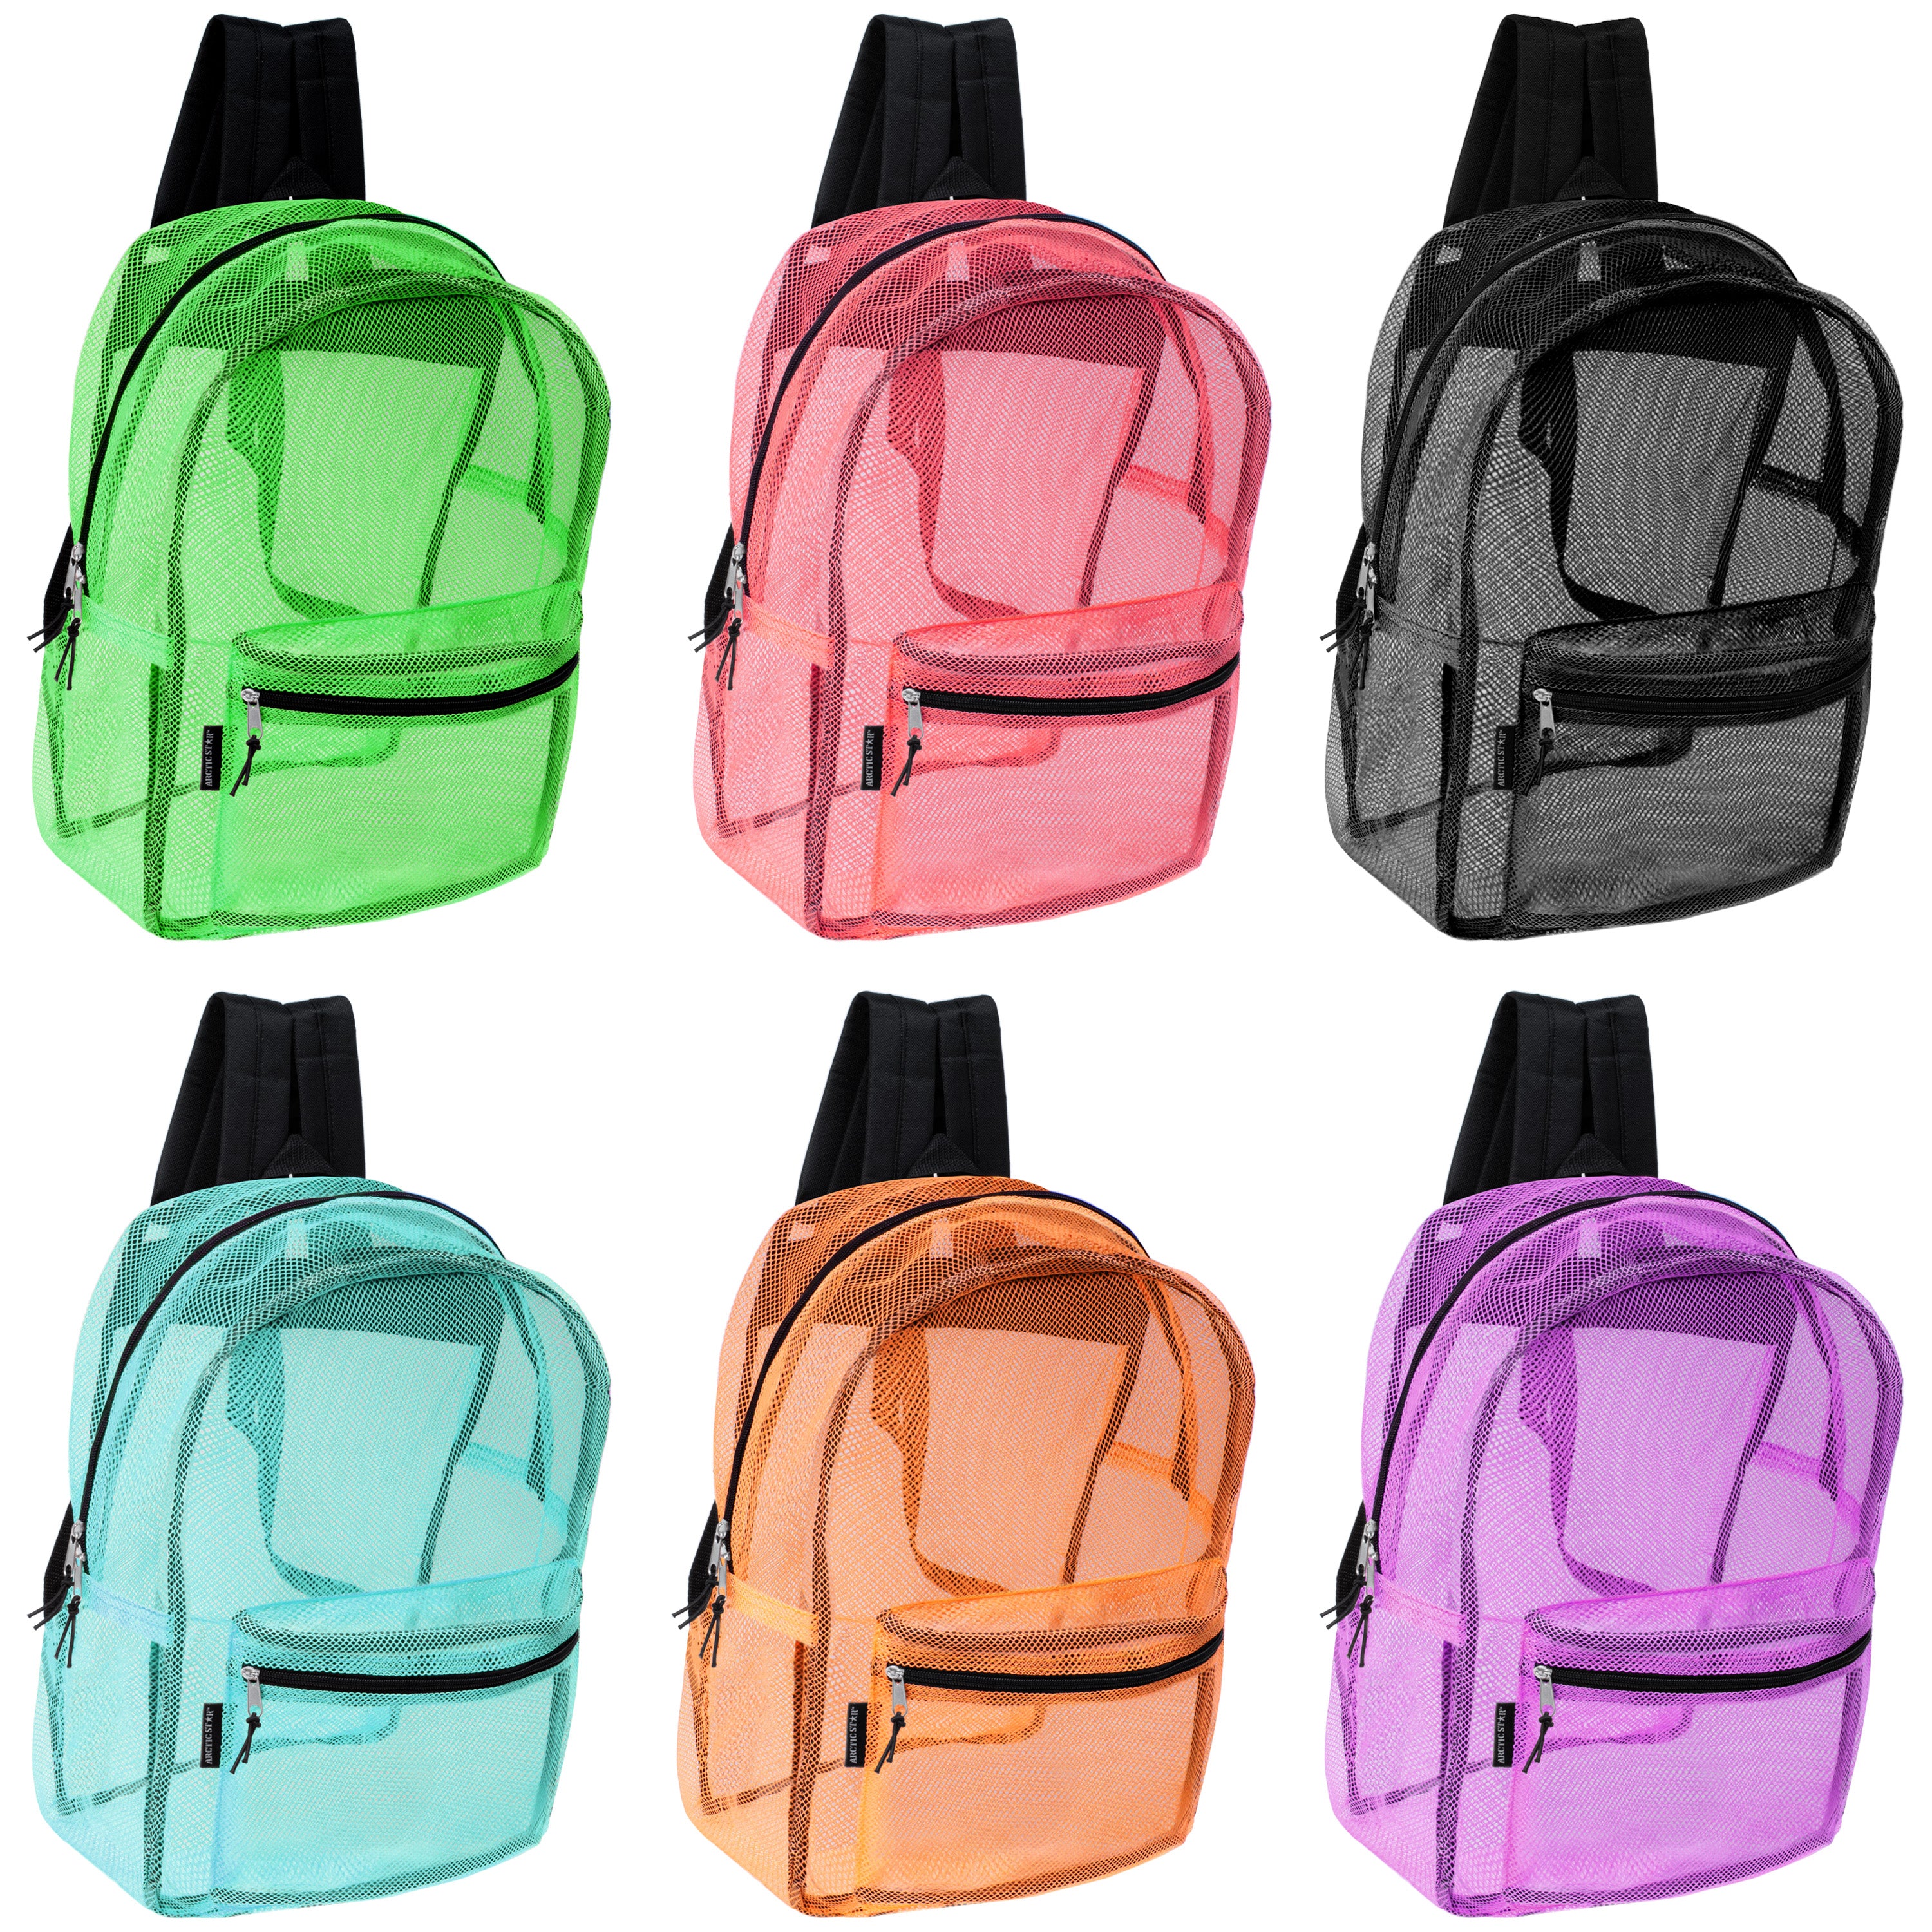 Wholesale Clear and Mesh Backpacks | Backpacks USA